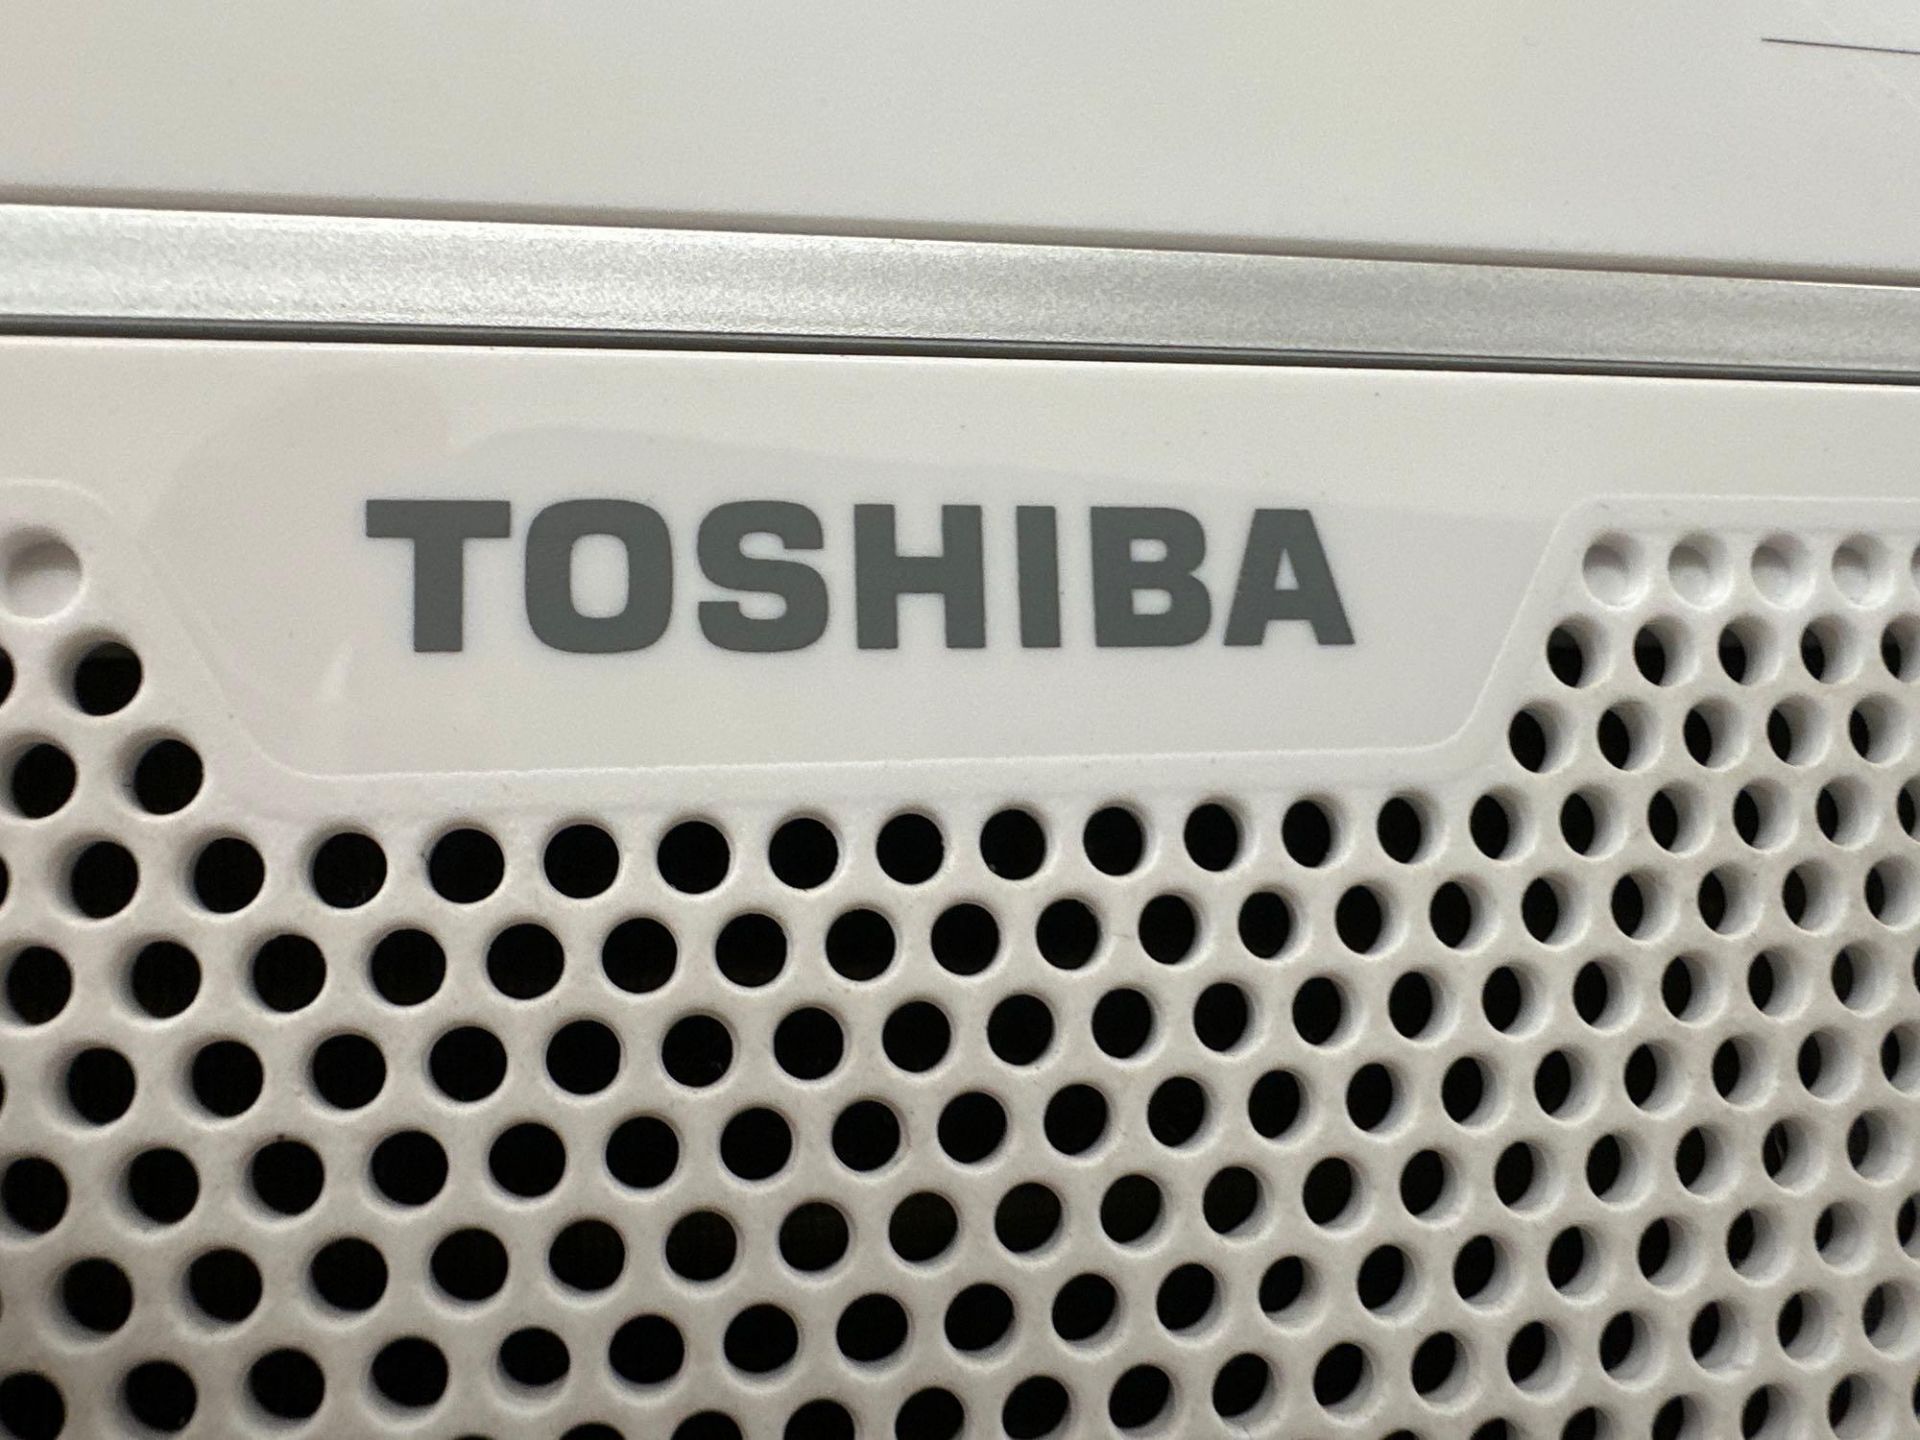 Toshiba Window Air Condition Unit - Image 3 of 4